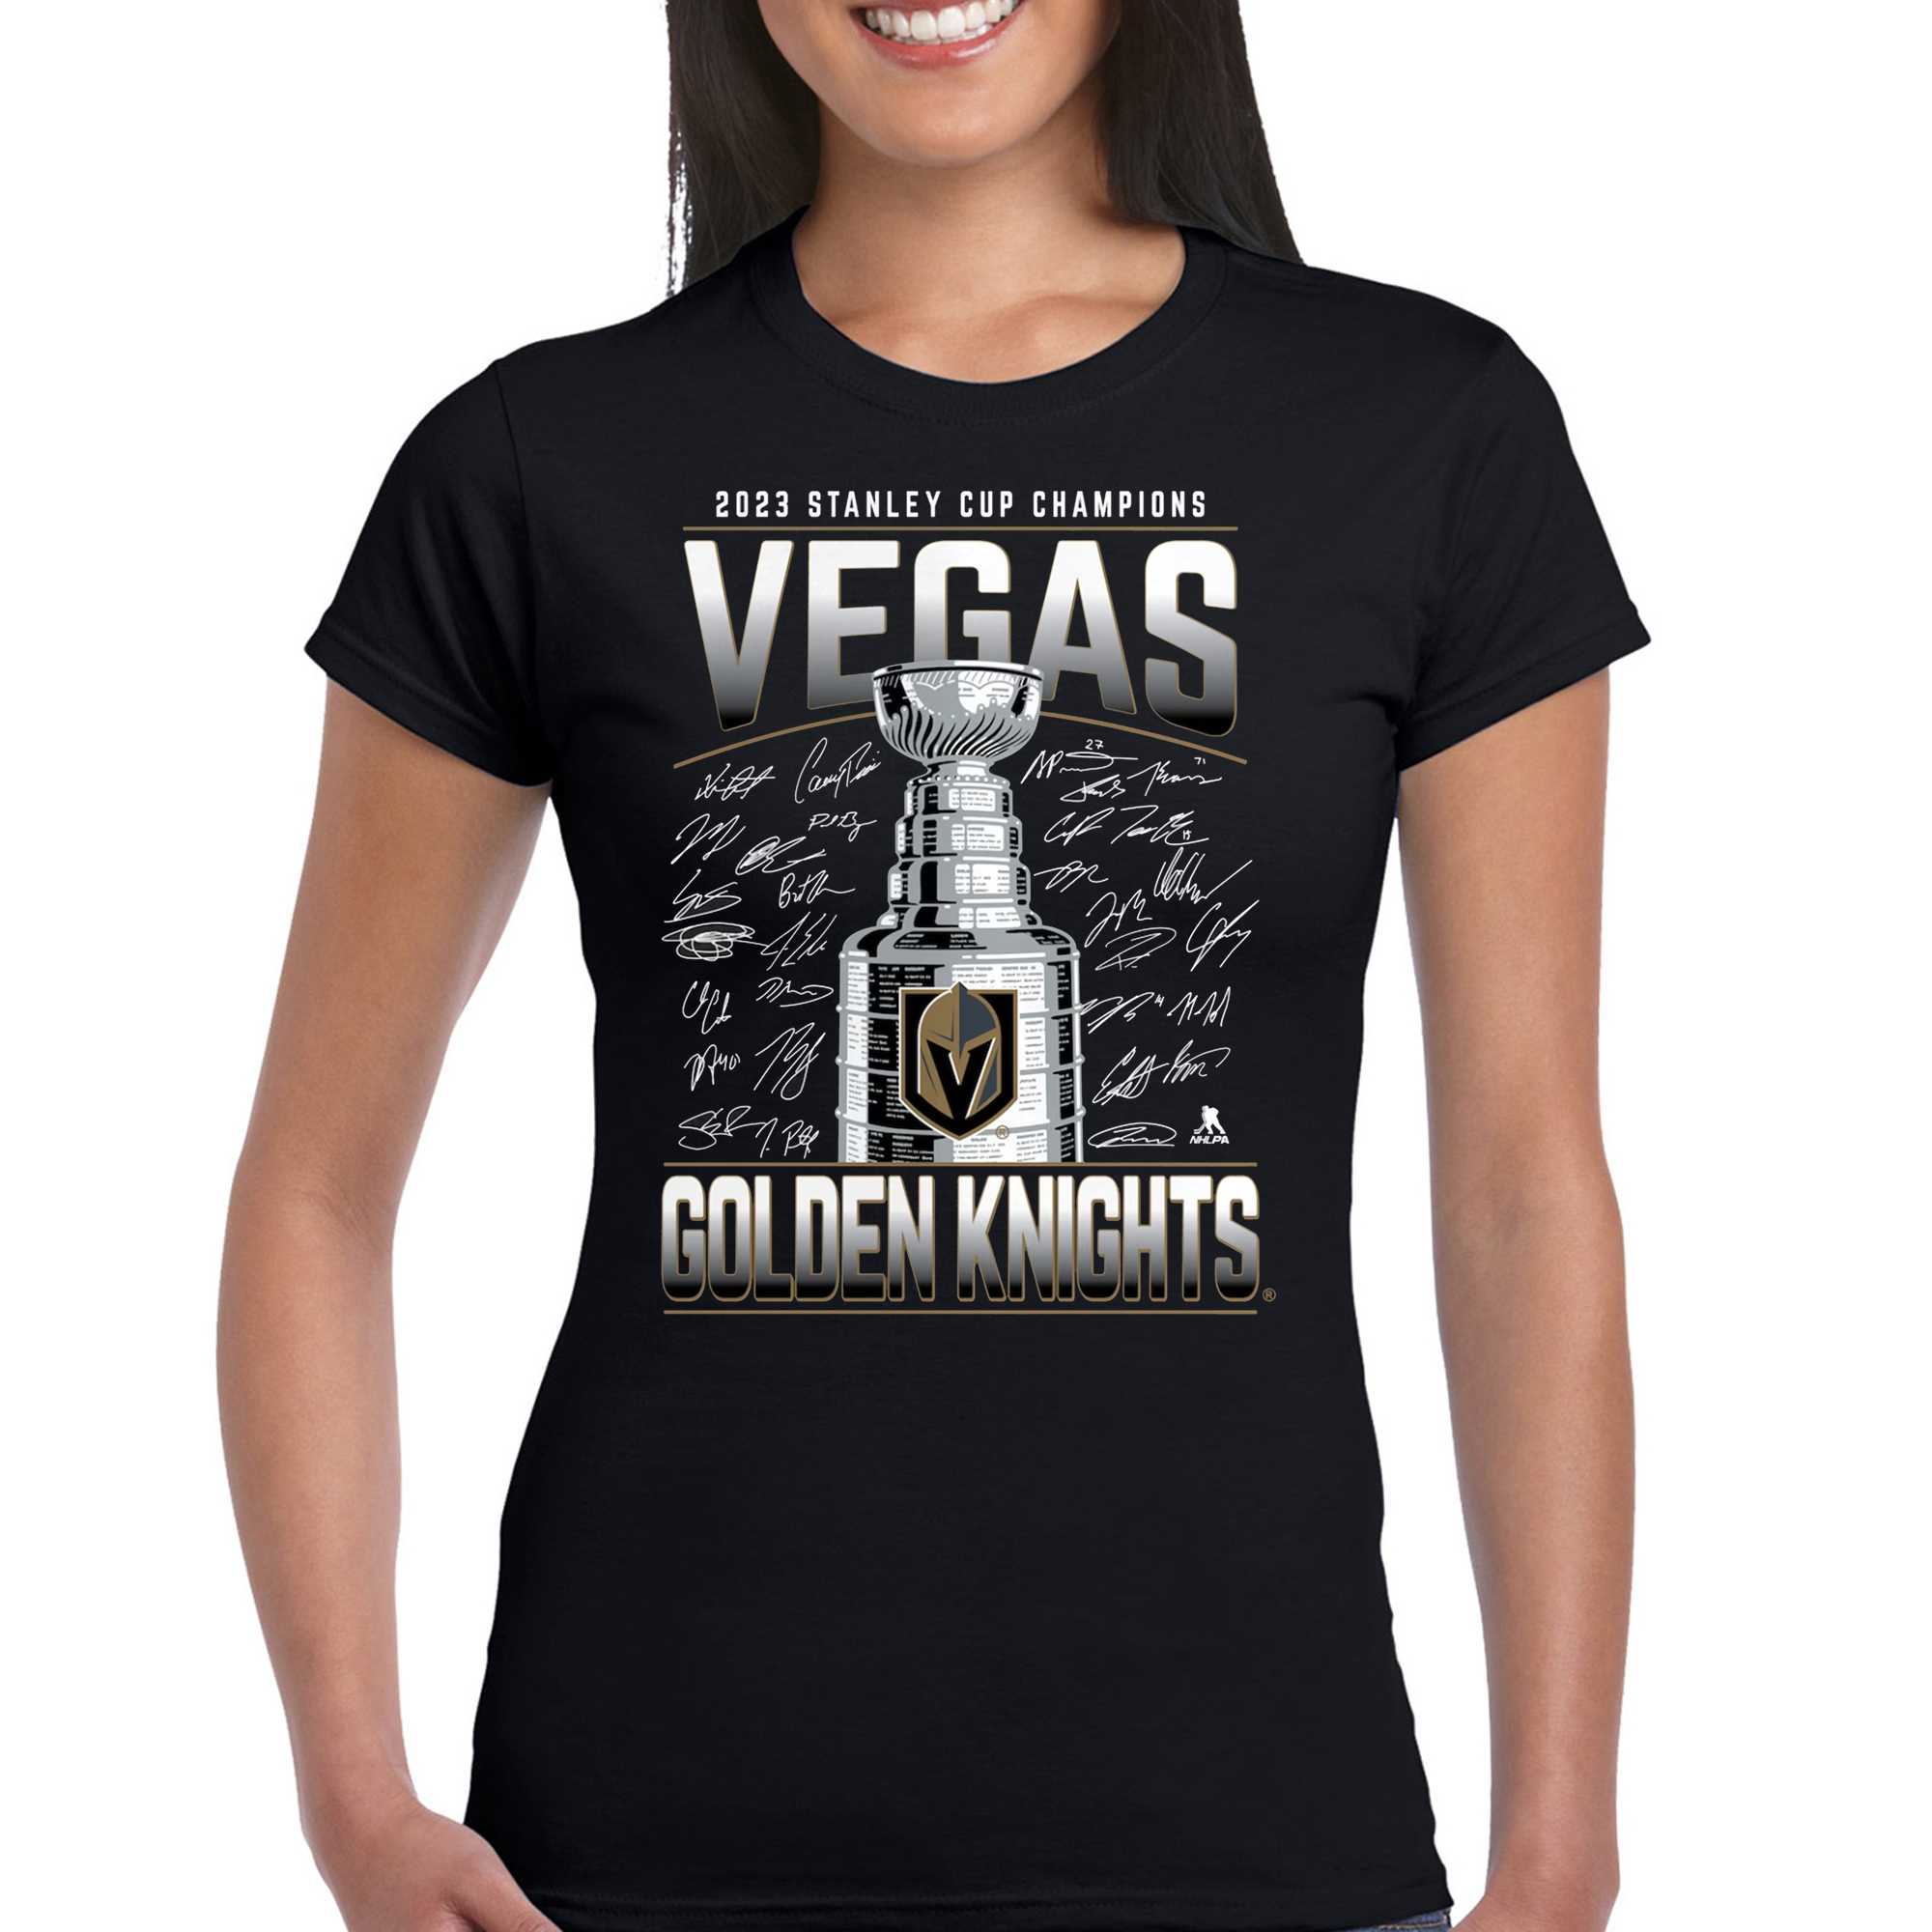 https://shibtee.com/wp-content/uploads/2023/06/2023-stanley-cup-champions-vegas-golden-knights-signature-t-shirt-2.jpg